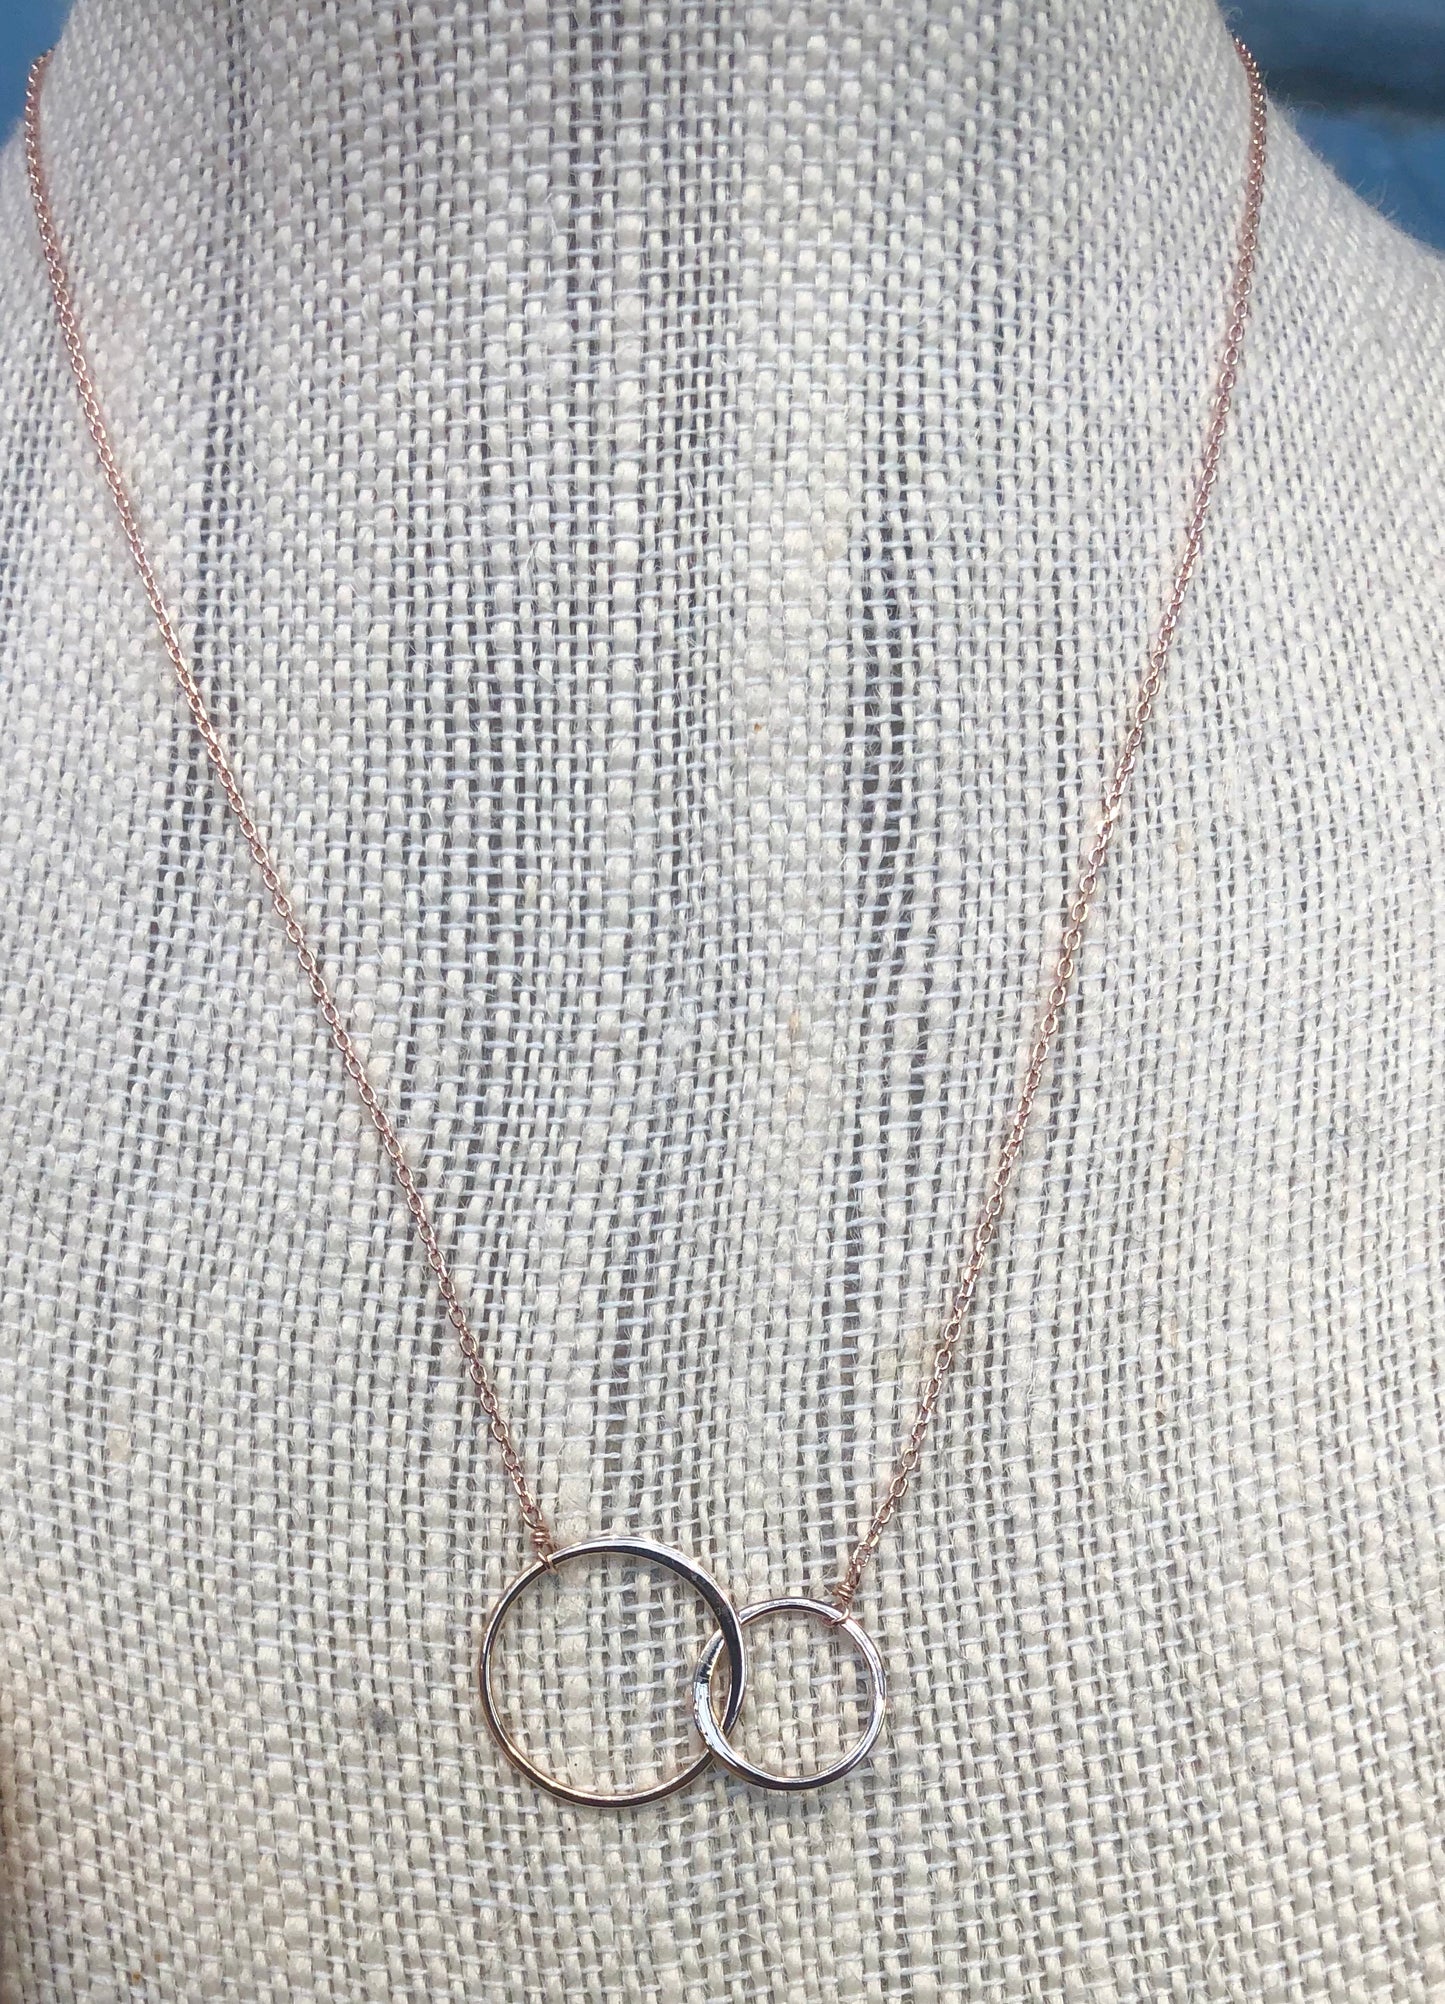 Double Circle Interlocked Necklace